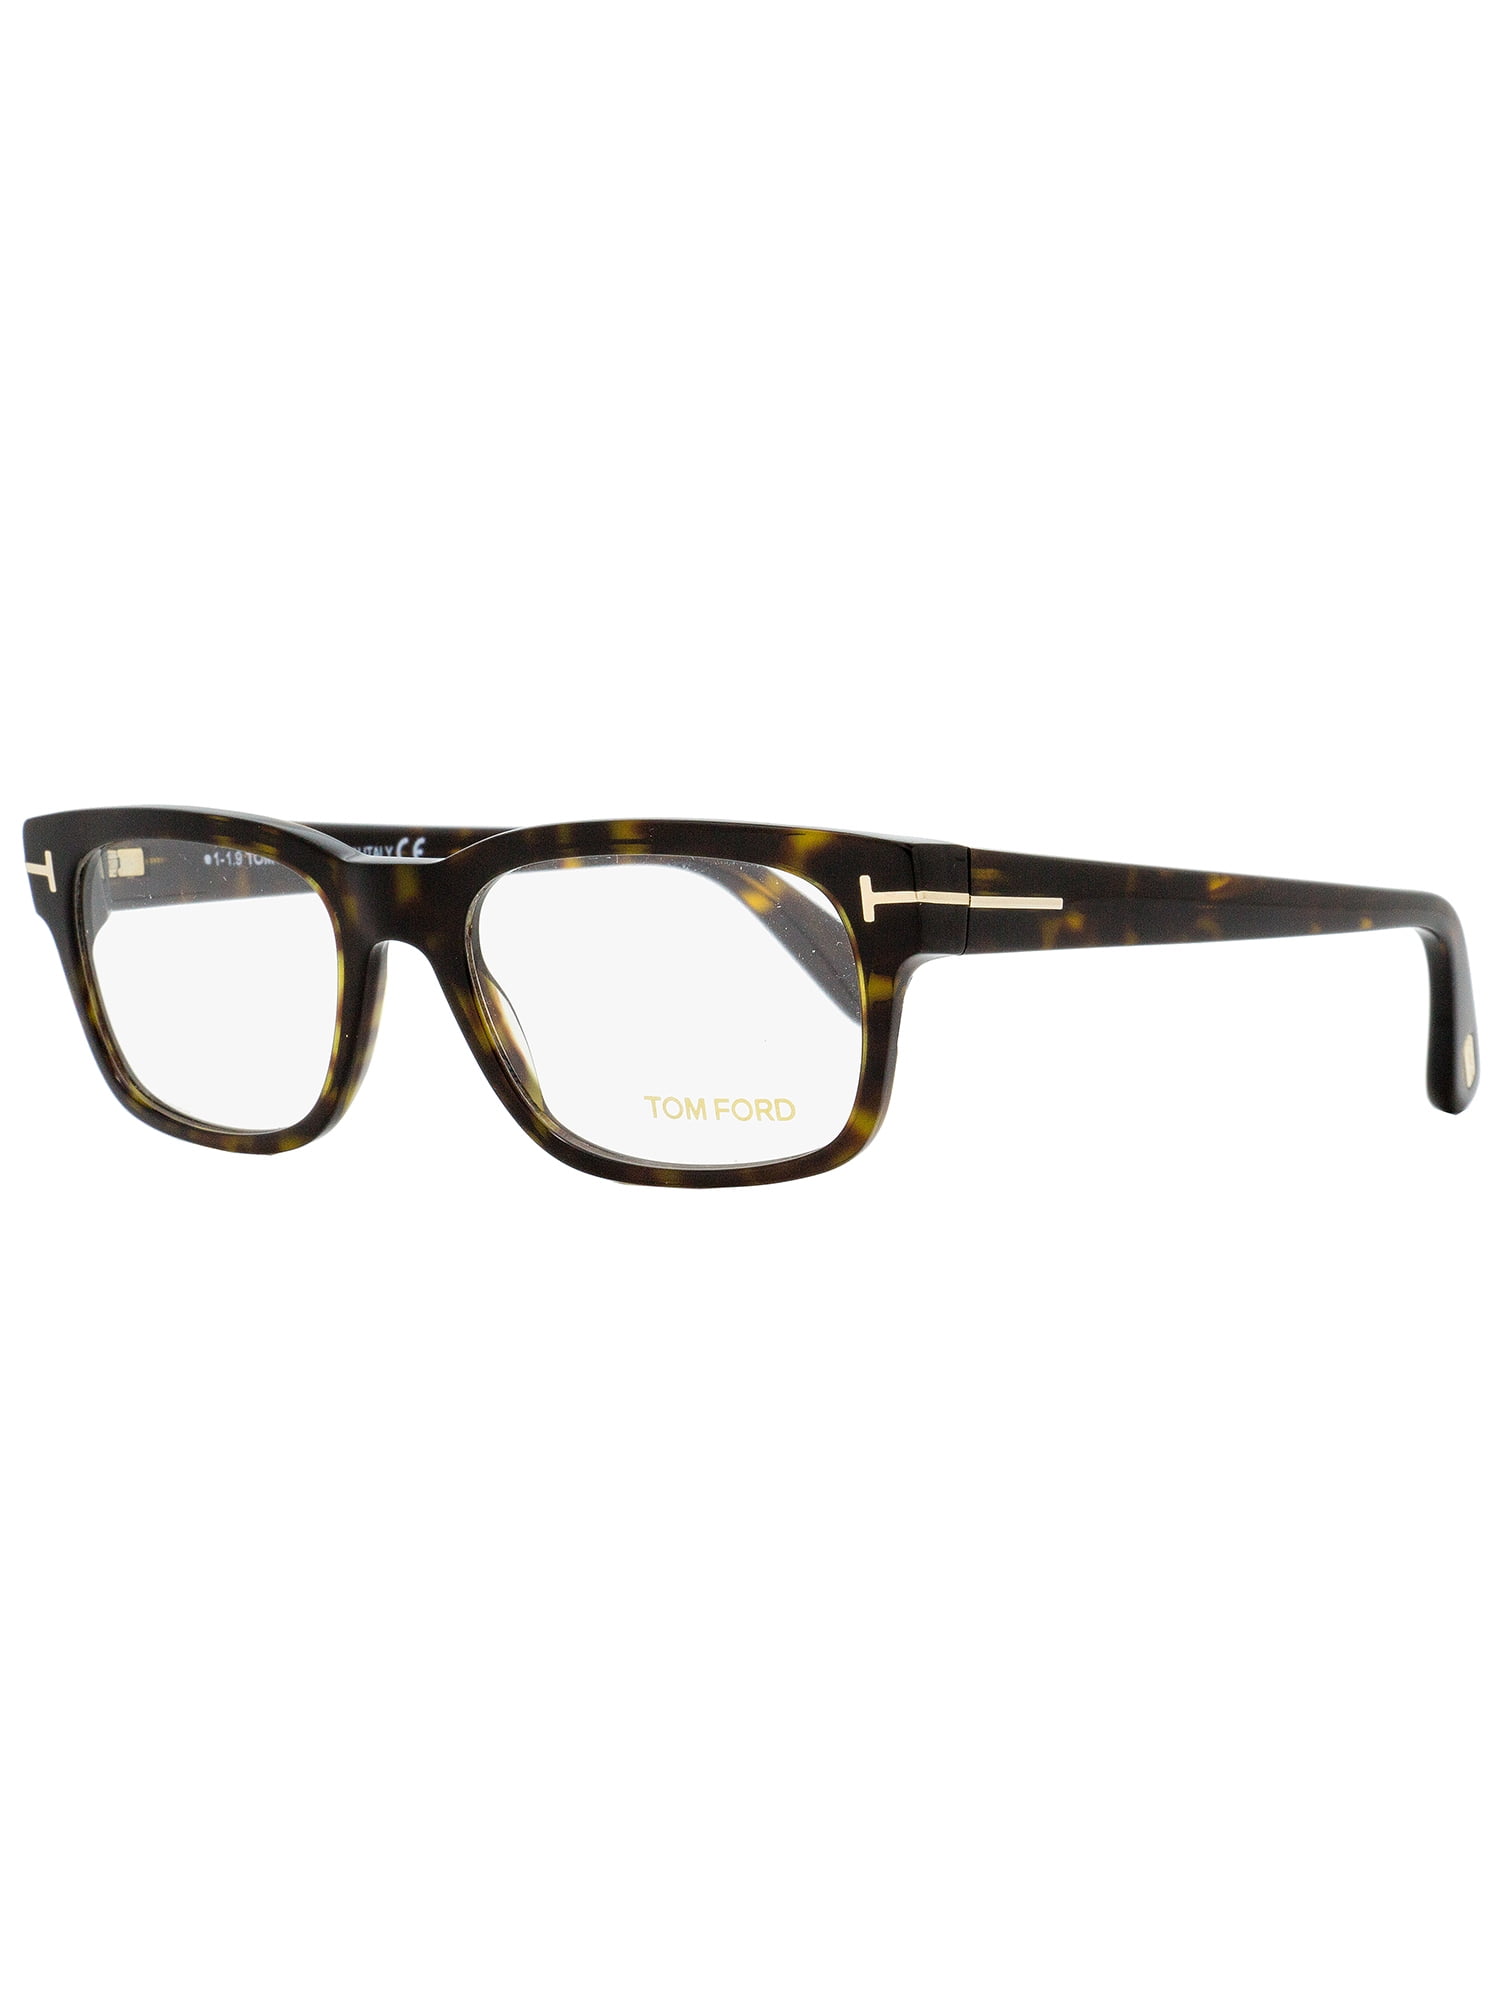 Tom Ford FT5432 Rectangle Man Eyeglasses - Walmart.com